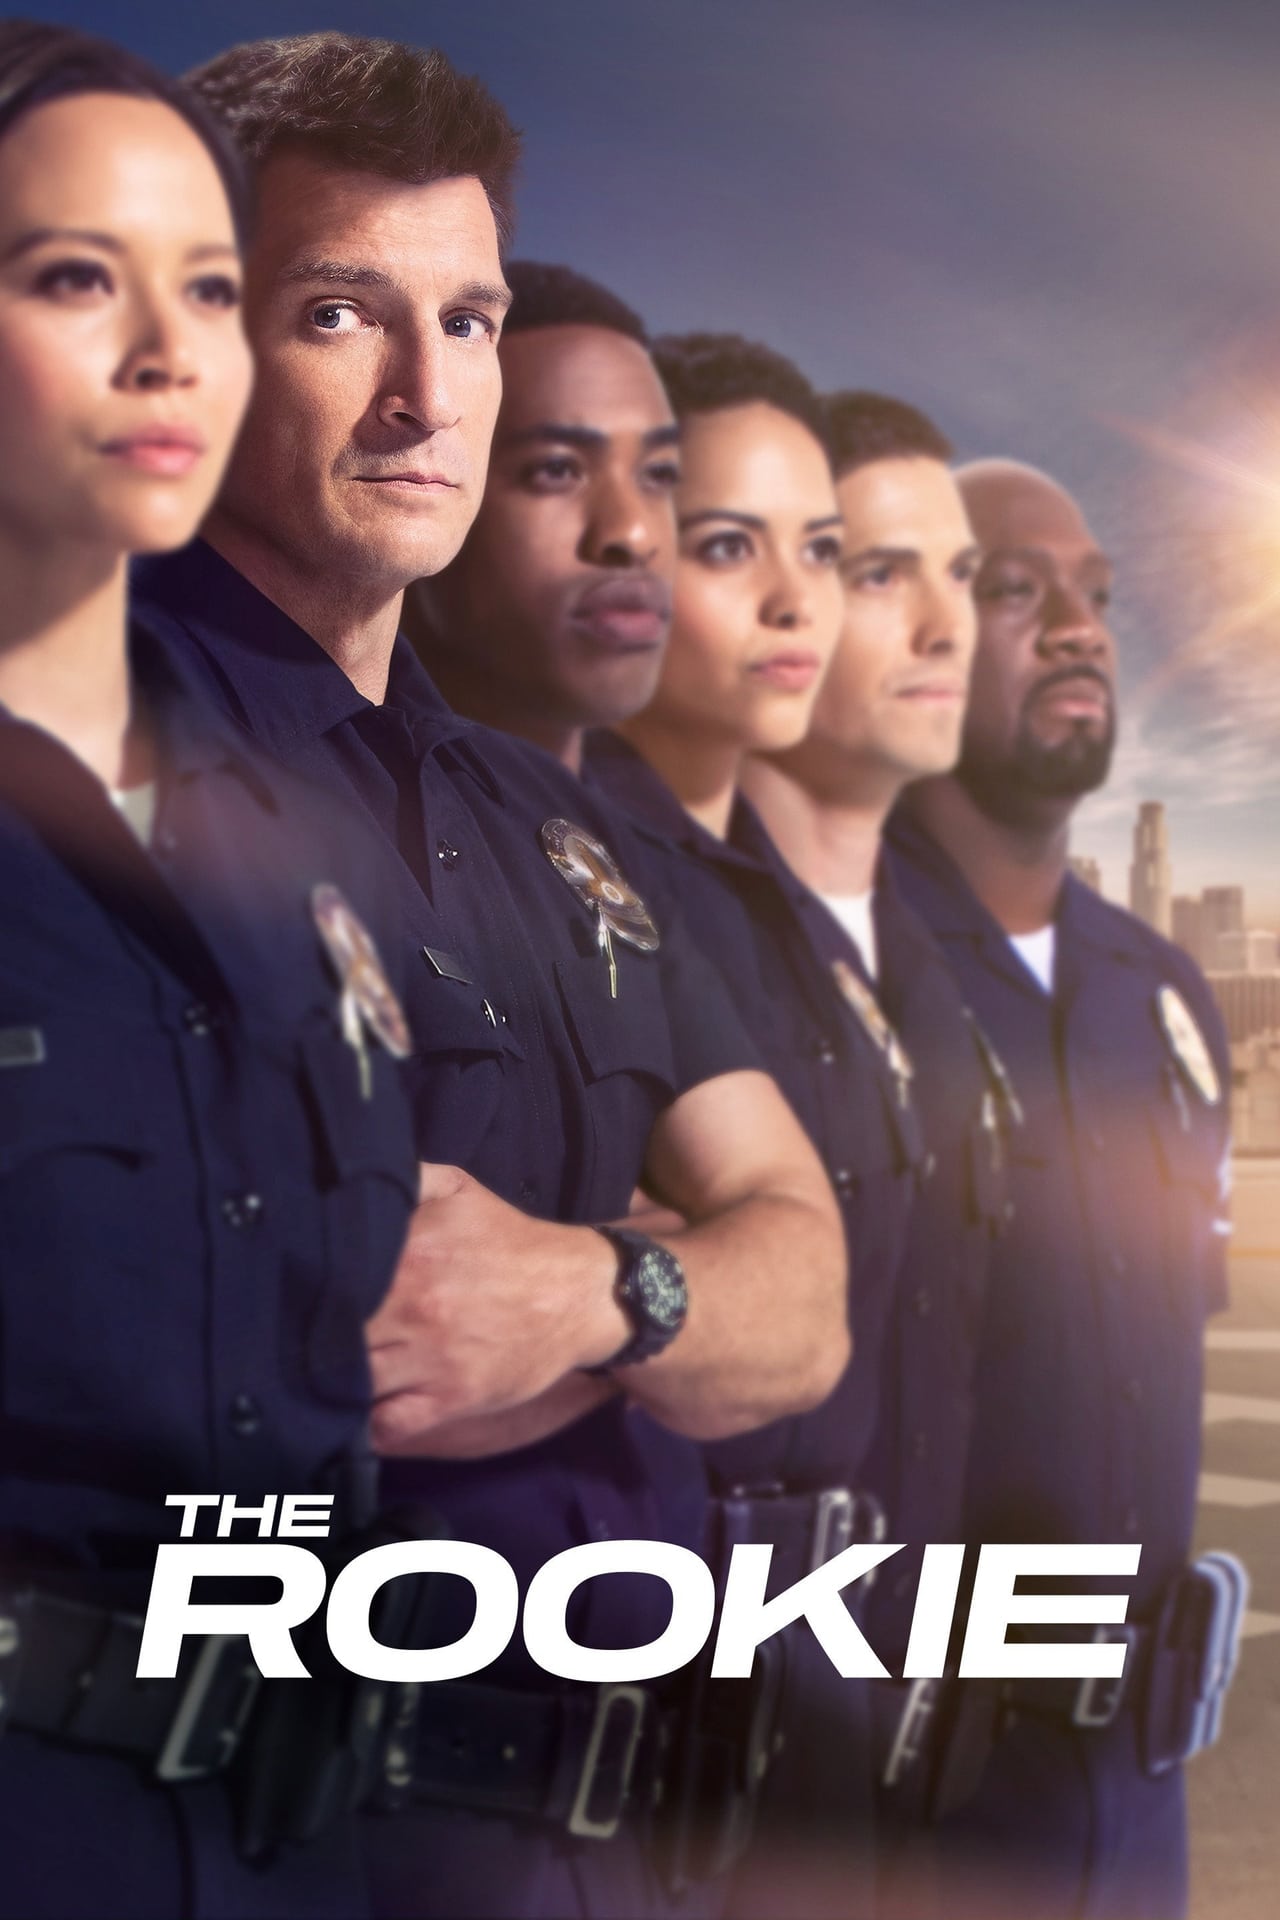 The Rookie (season 3)